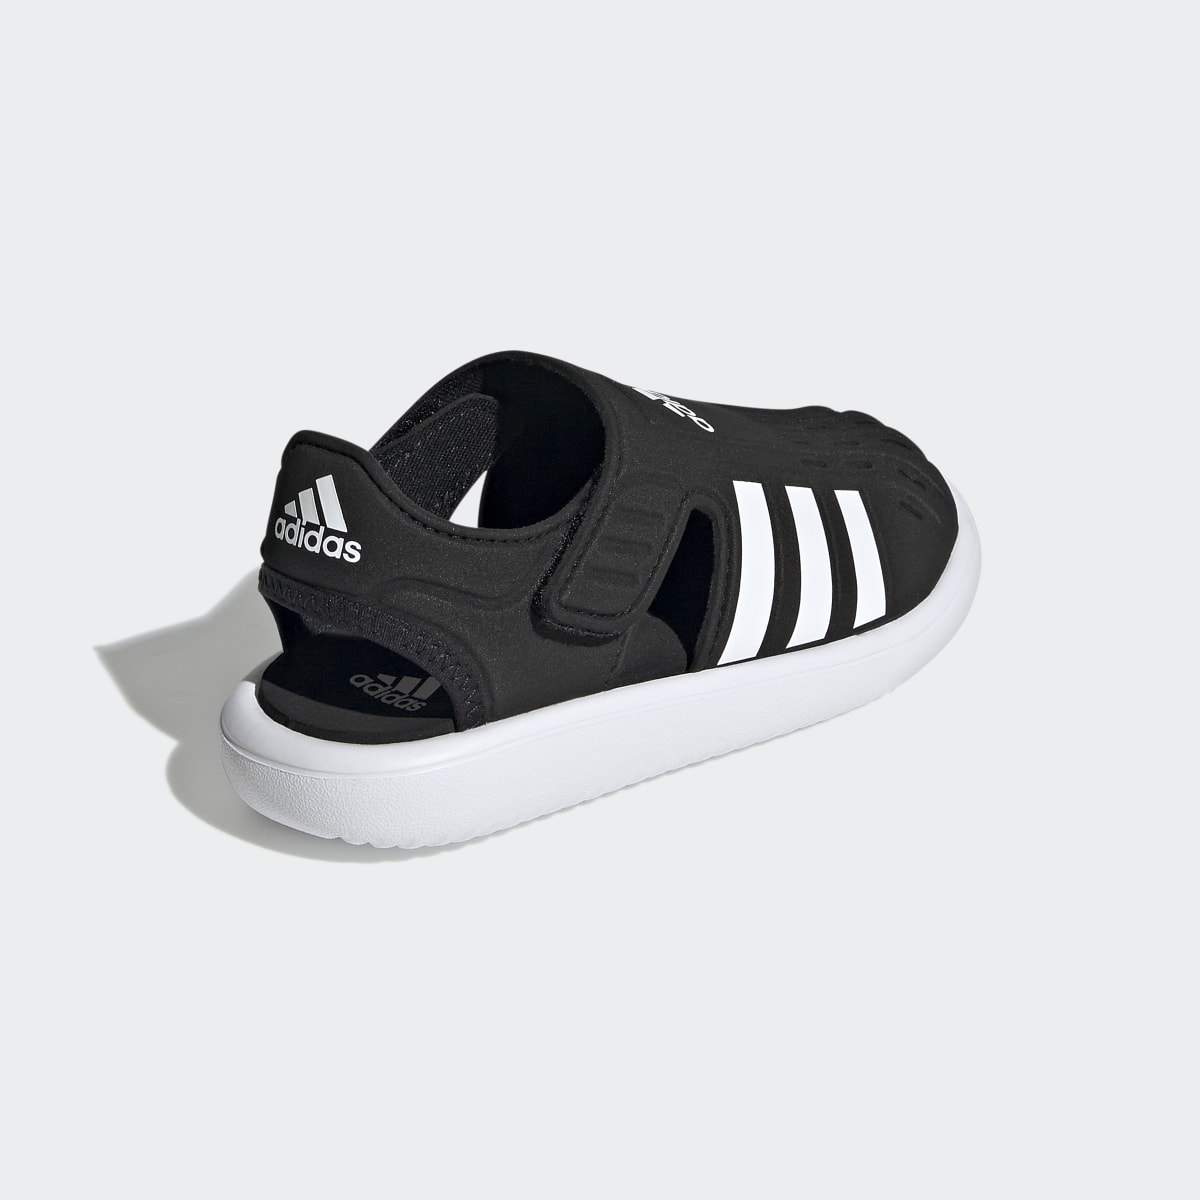 Adidas Summer Closed Toe Water Sandals. 6